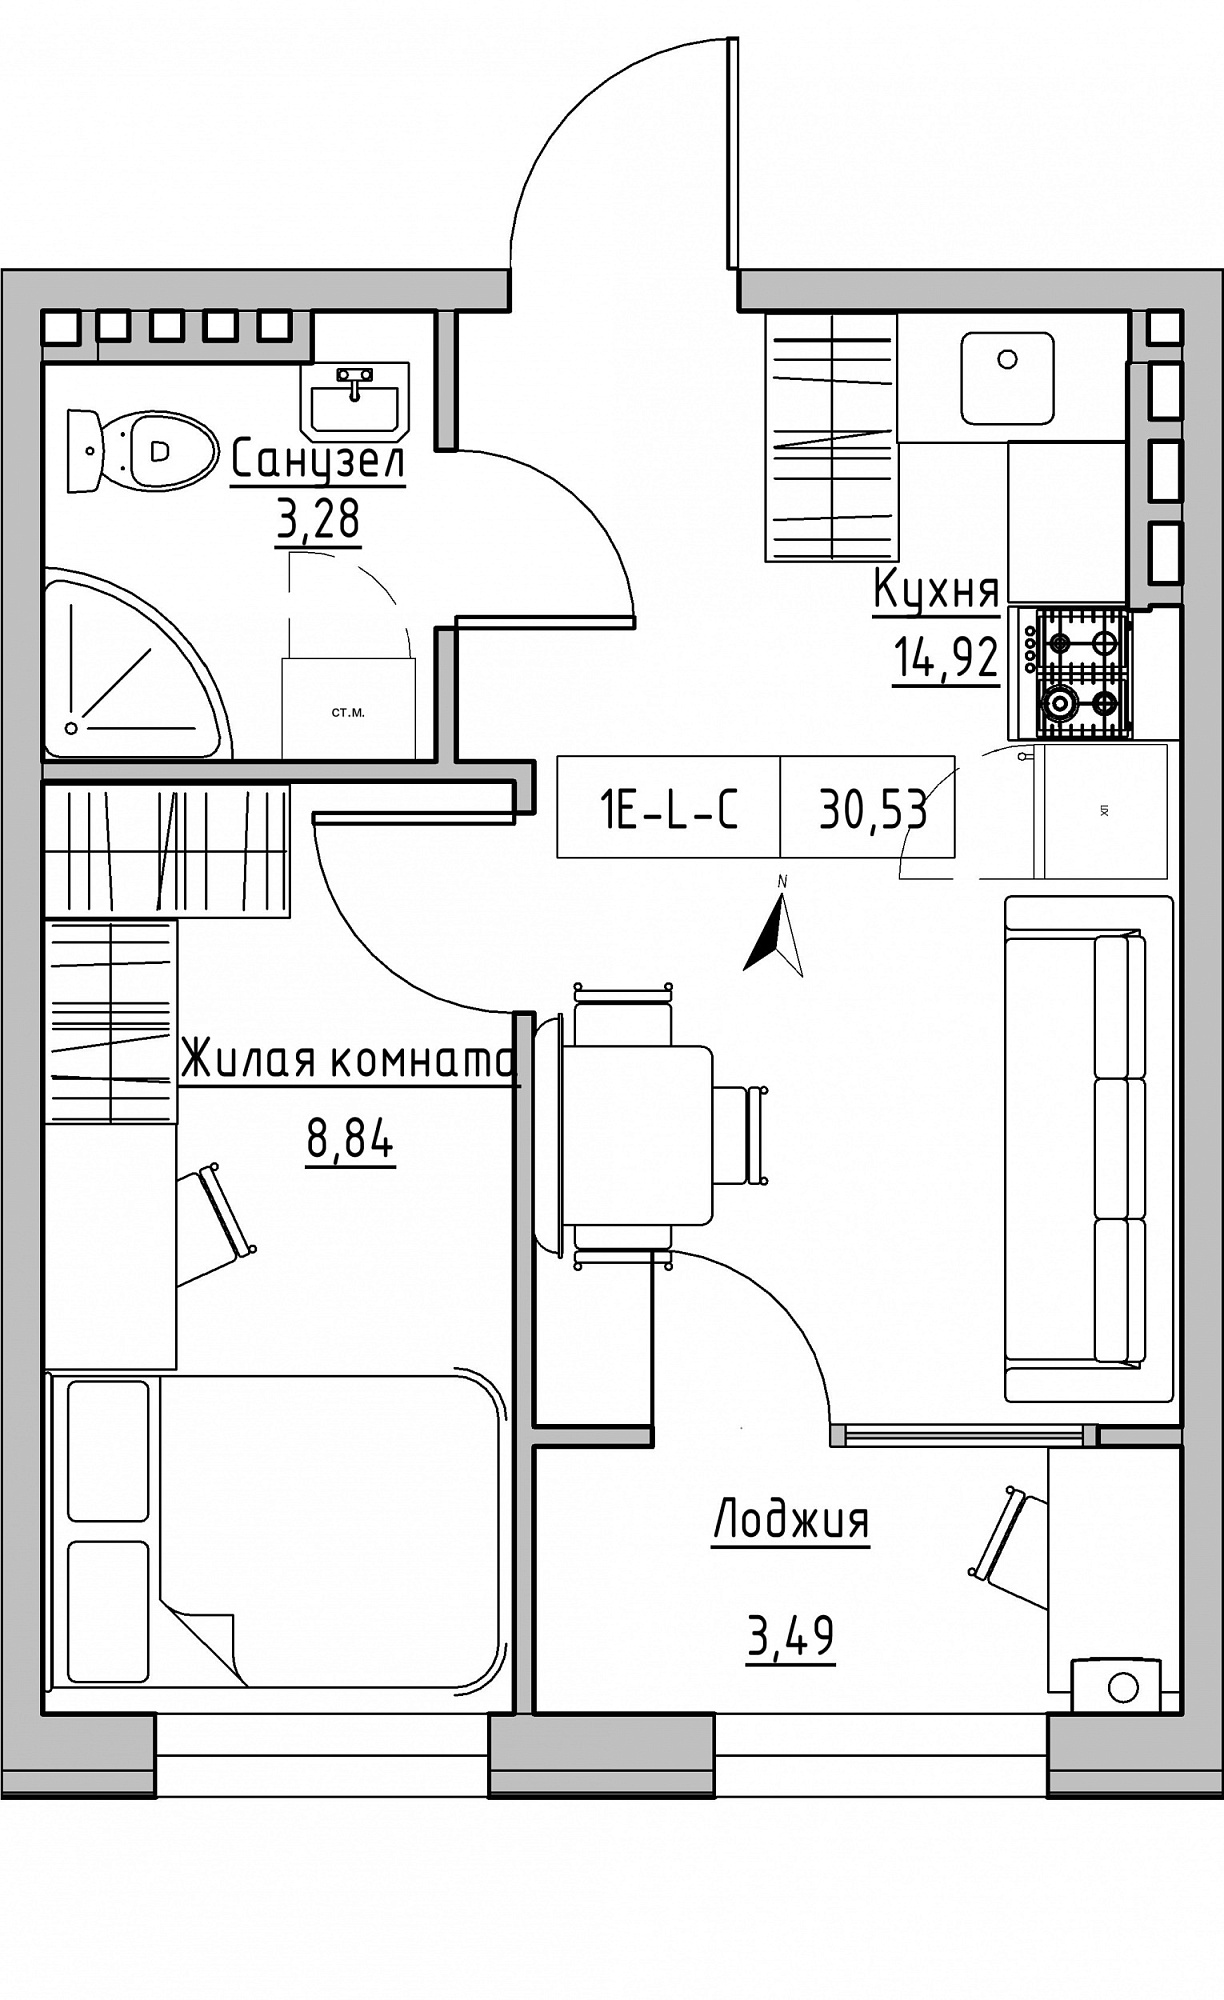 Planning 1-rm flats area 30.53m2, KS-024-04/0008.